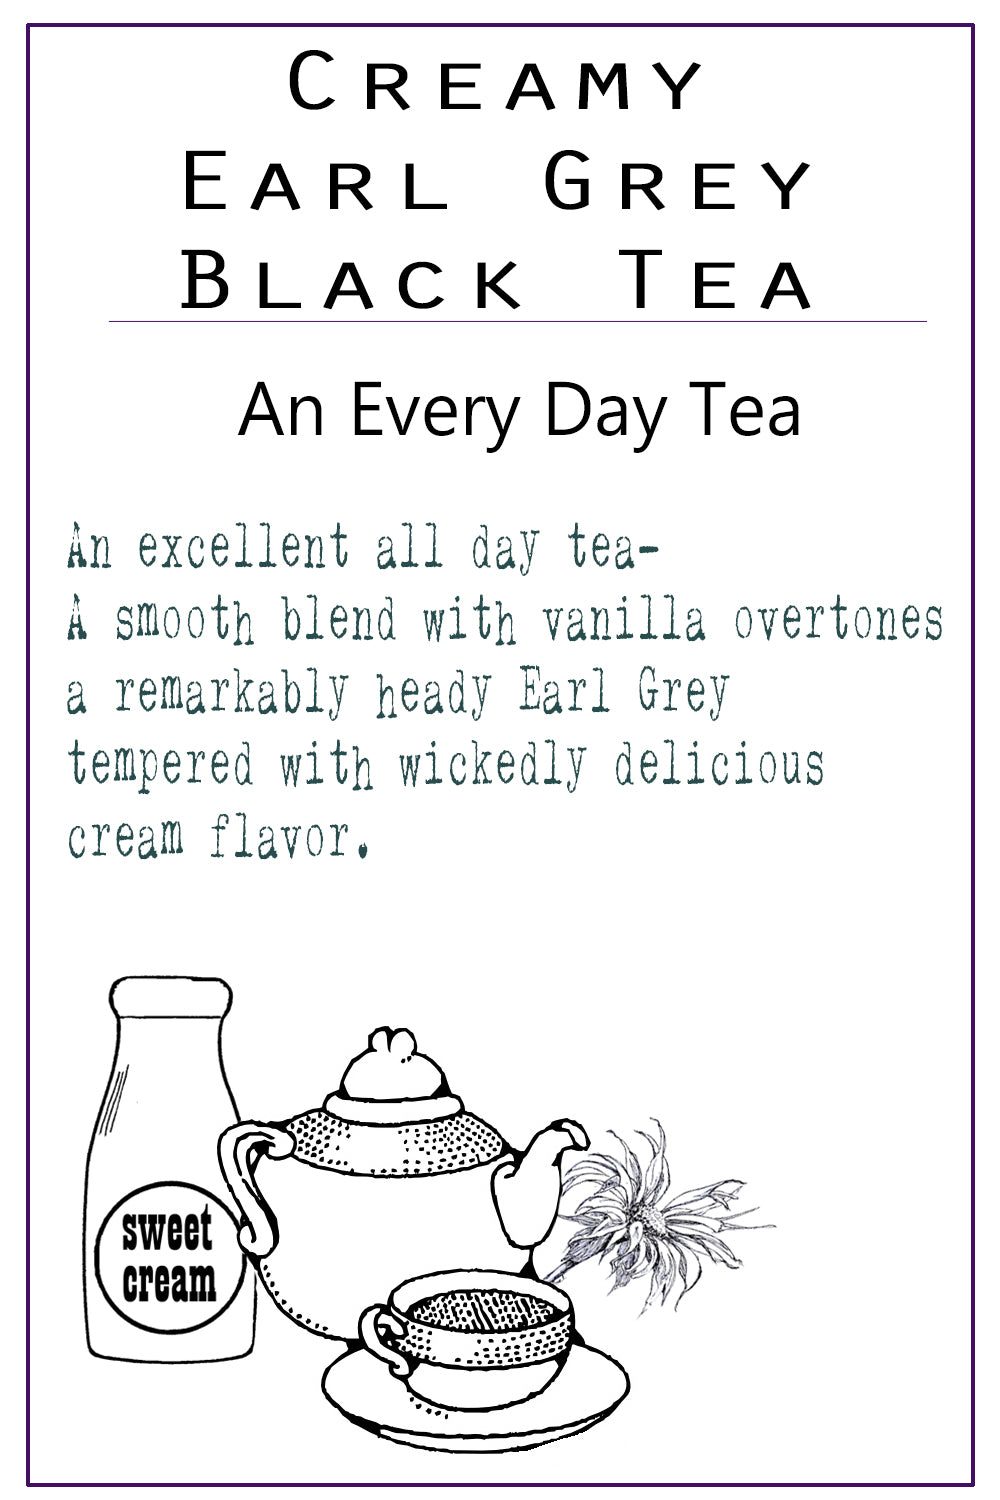 Organic Creamy Earl Grey Black Tea | English Tea Party | Premium Loose Leaf Tea